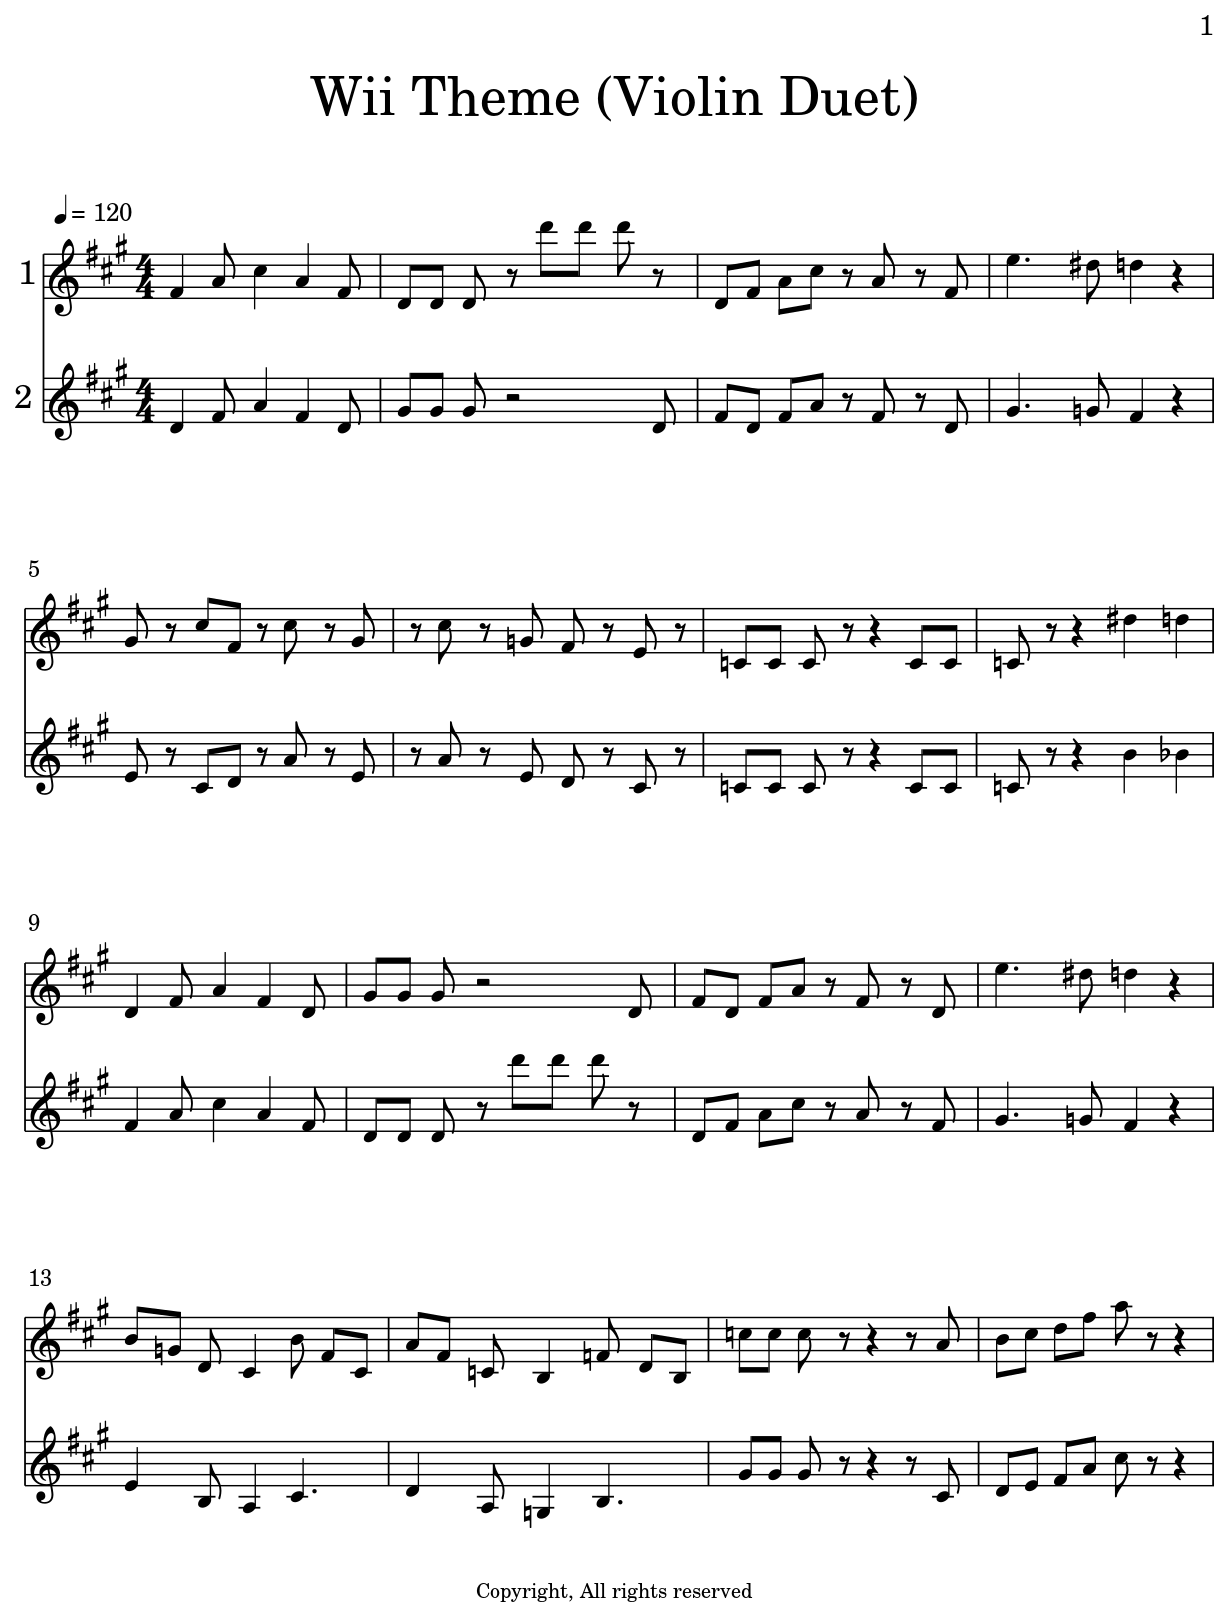 Wii Theme (Violin Duet) - Flat